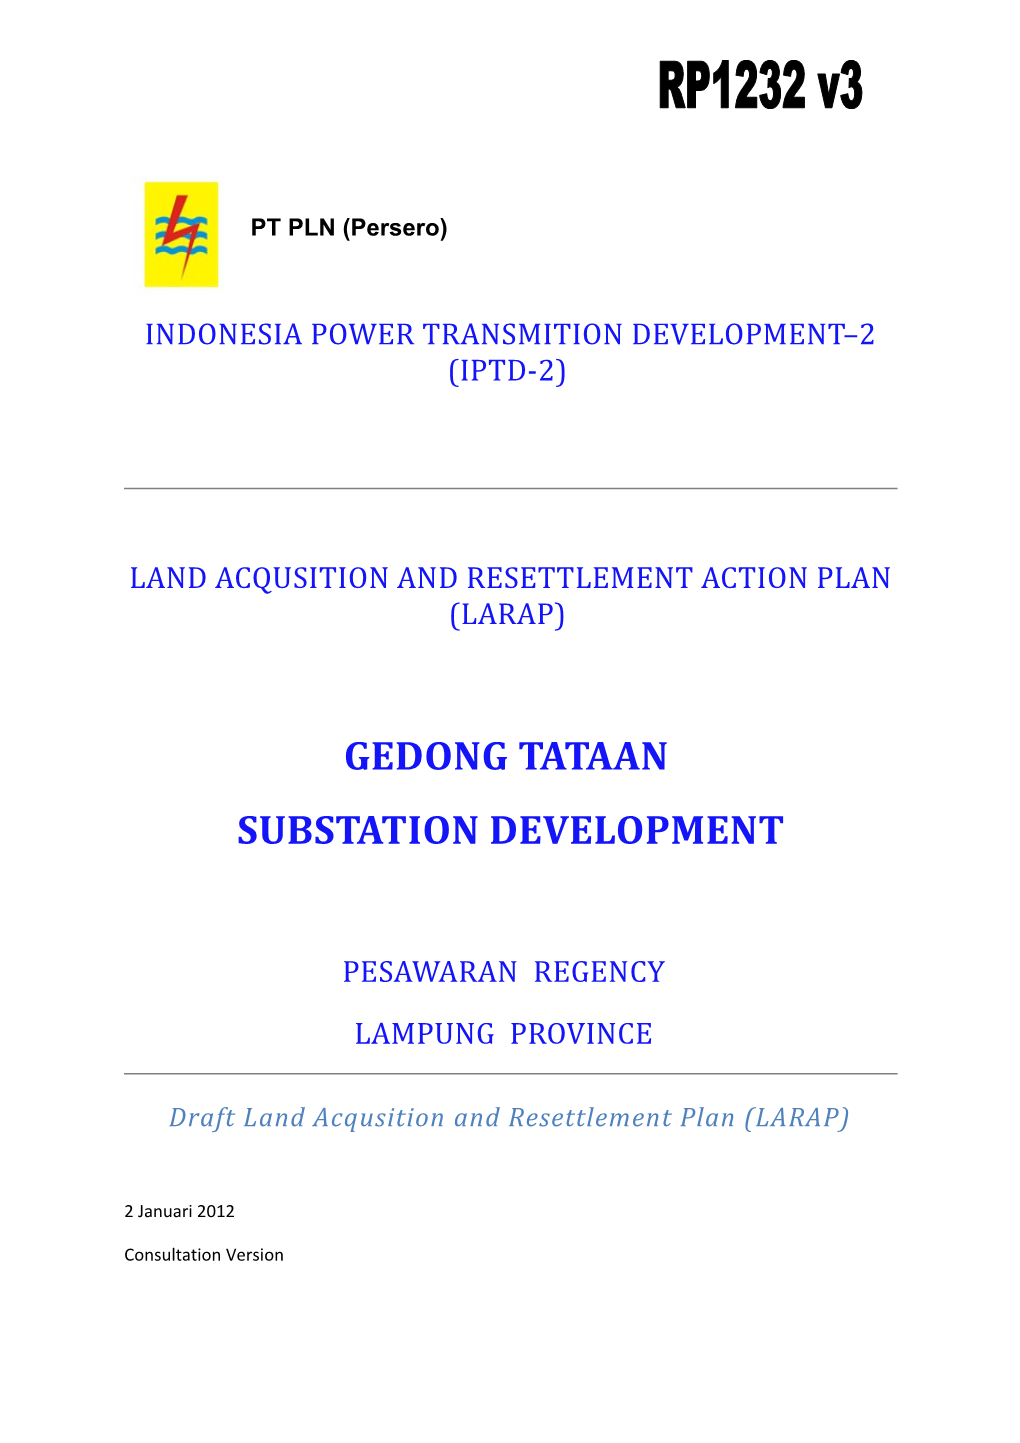 Indonesia Power Transmition Development 2 (Iptd-2)